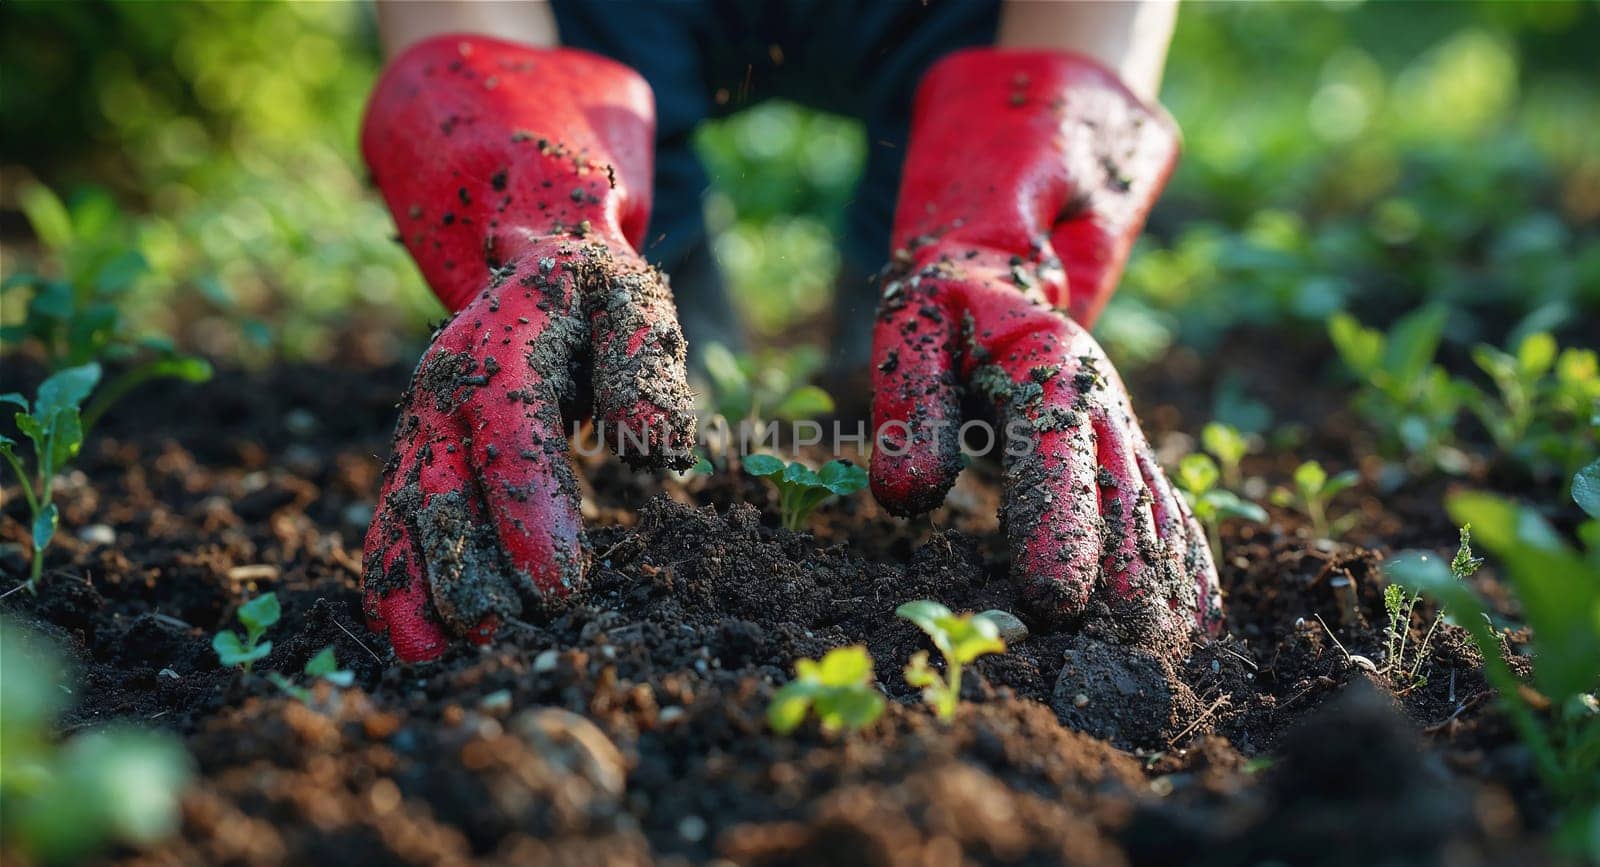 Person wearing red gardening gloves digging in soil